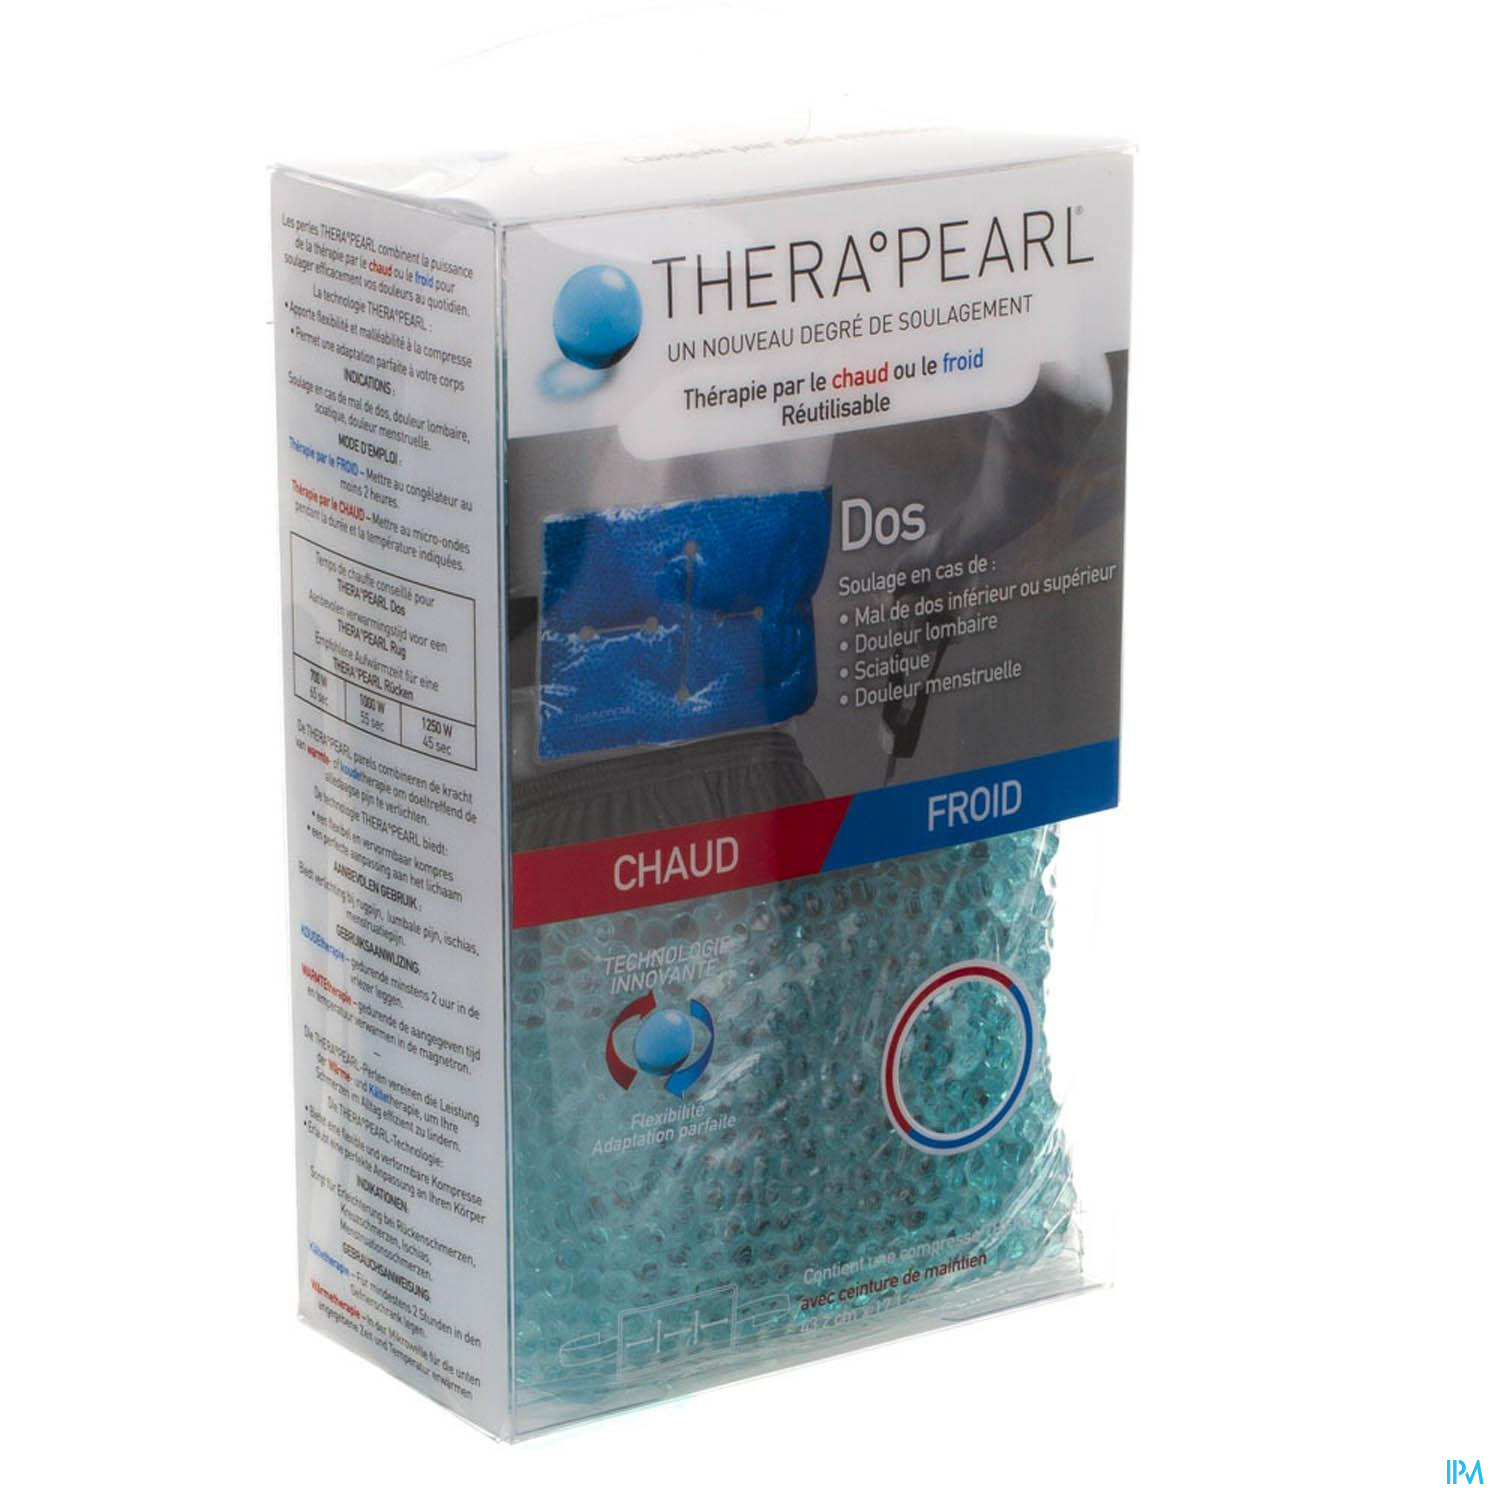 thee Peuter Ham Therapearl Hot-cold Pack Rug - Cold/hot therapie - EHBO - Thuiszorg & EHBO  - Apotheek Peeters Oudsbergen (Peeters Pharma BV)